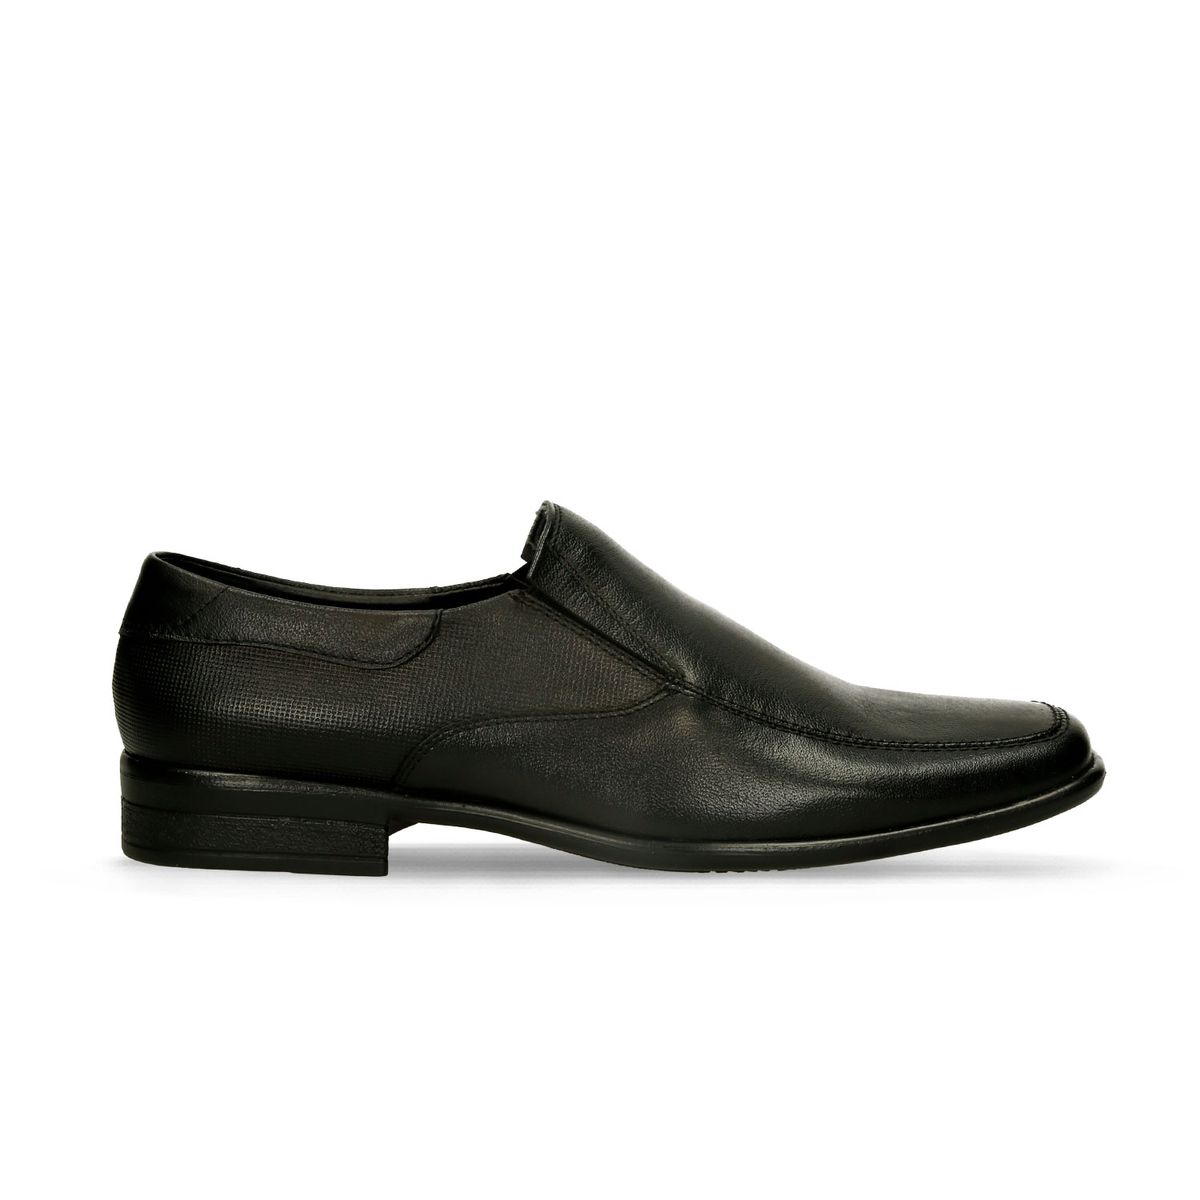 Zapatos Formales Negro Bata Ernesto Moc Hombre